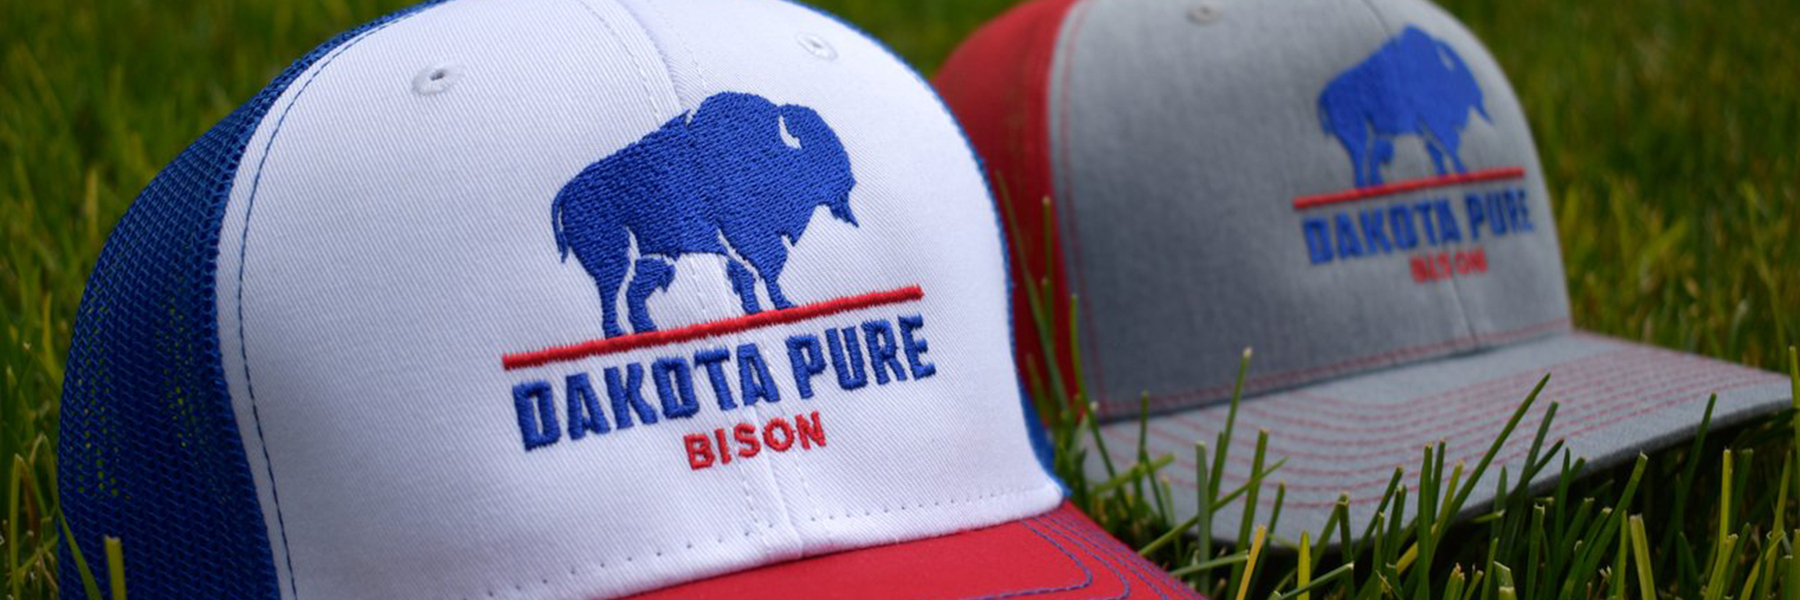 Dakota Pure Bison caps with logo